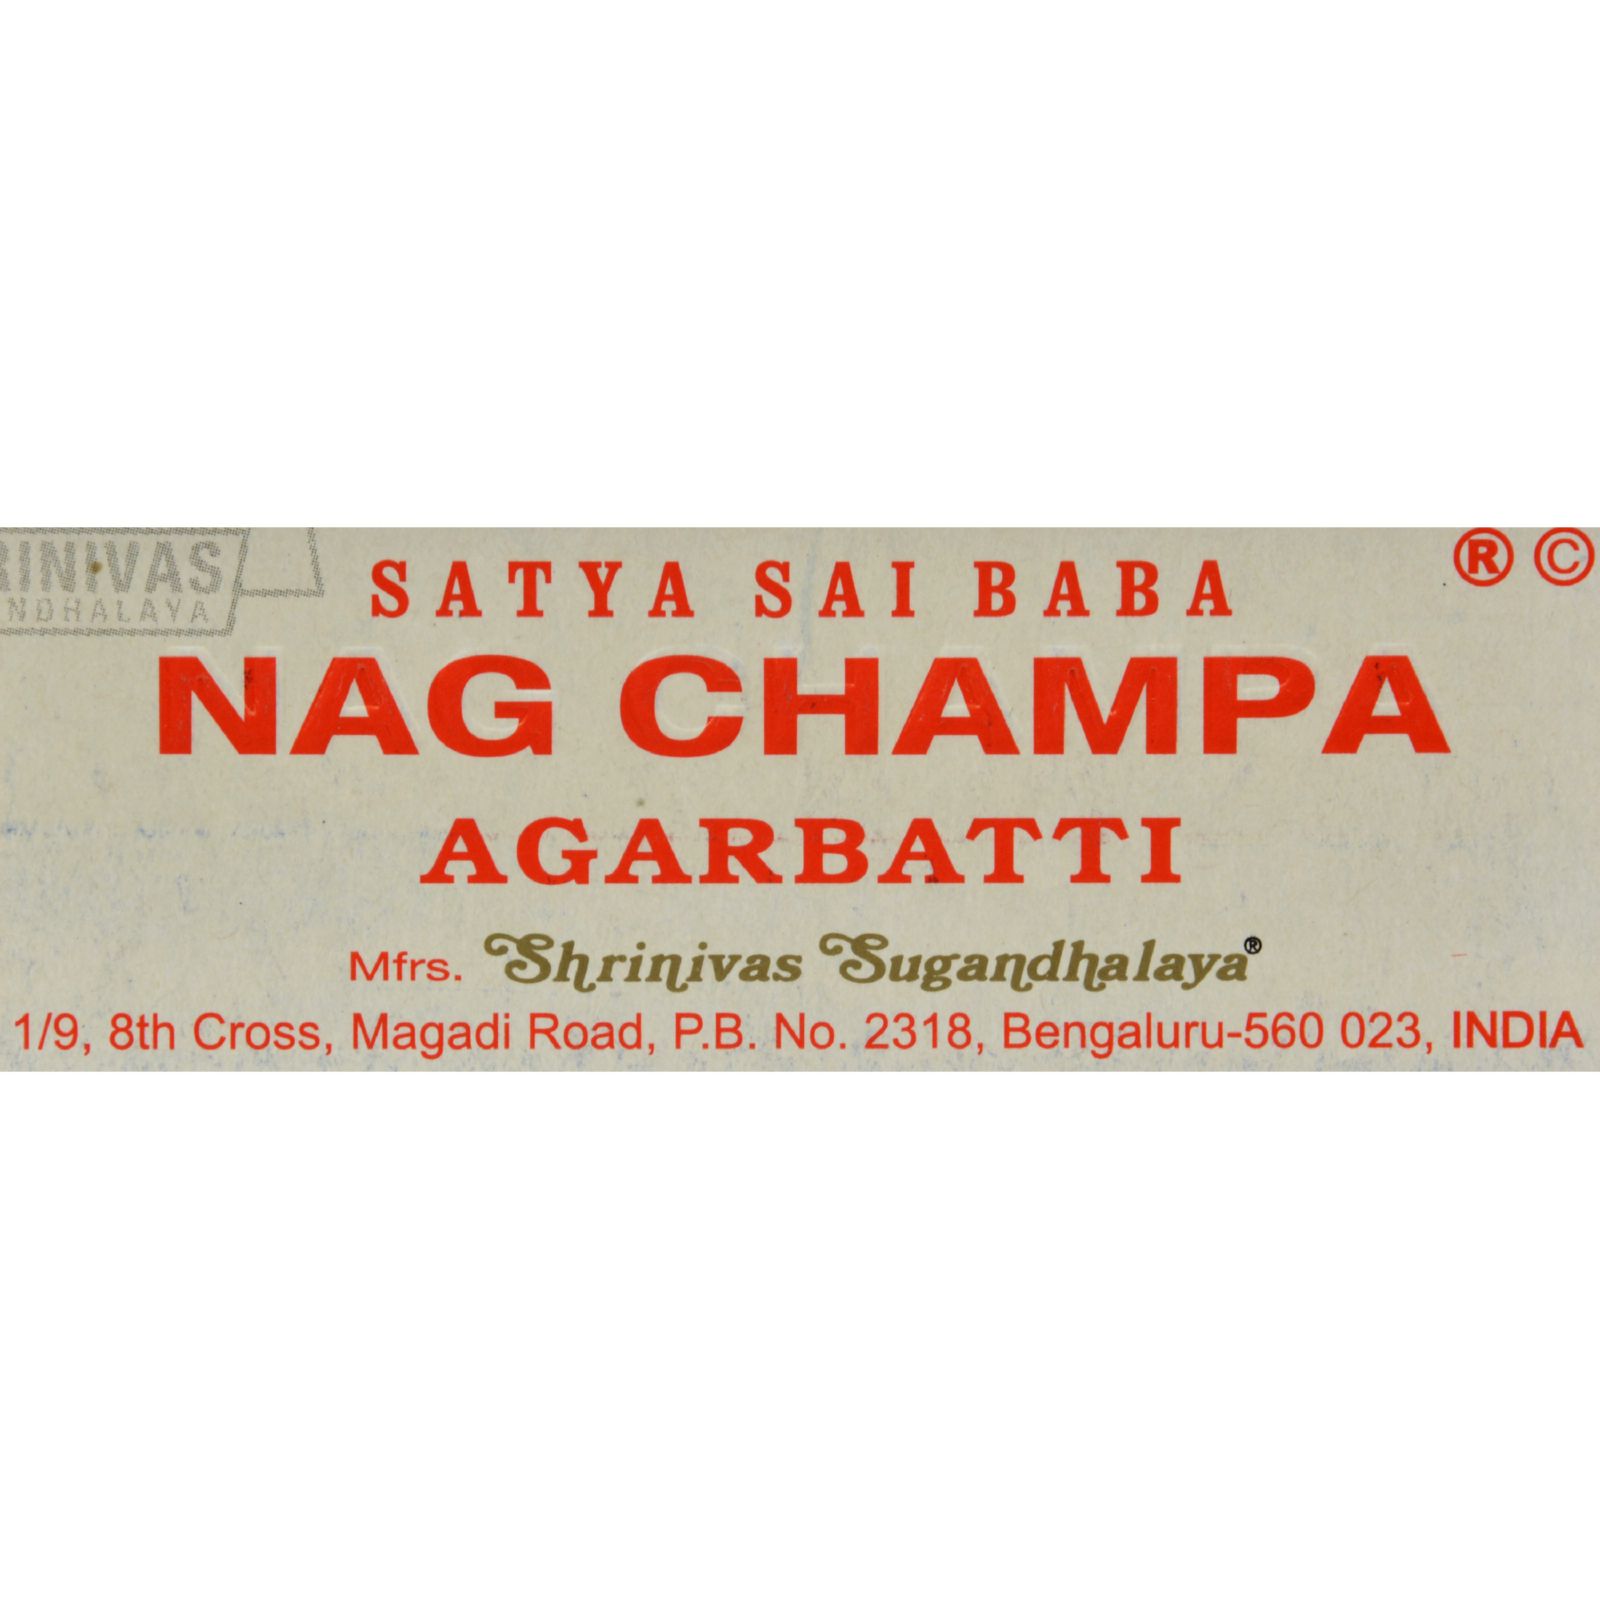 Sai Baba Nag Champa Agarbatti Incense - 15 g - 12개 묶음상품